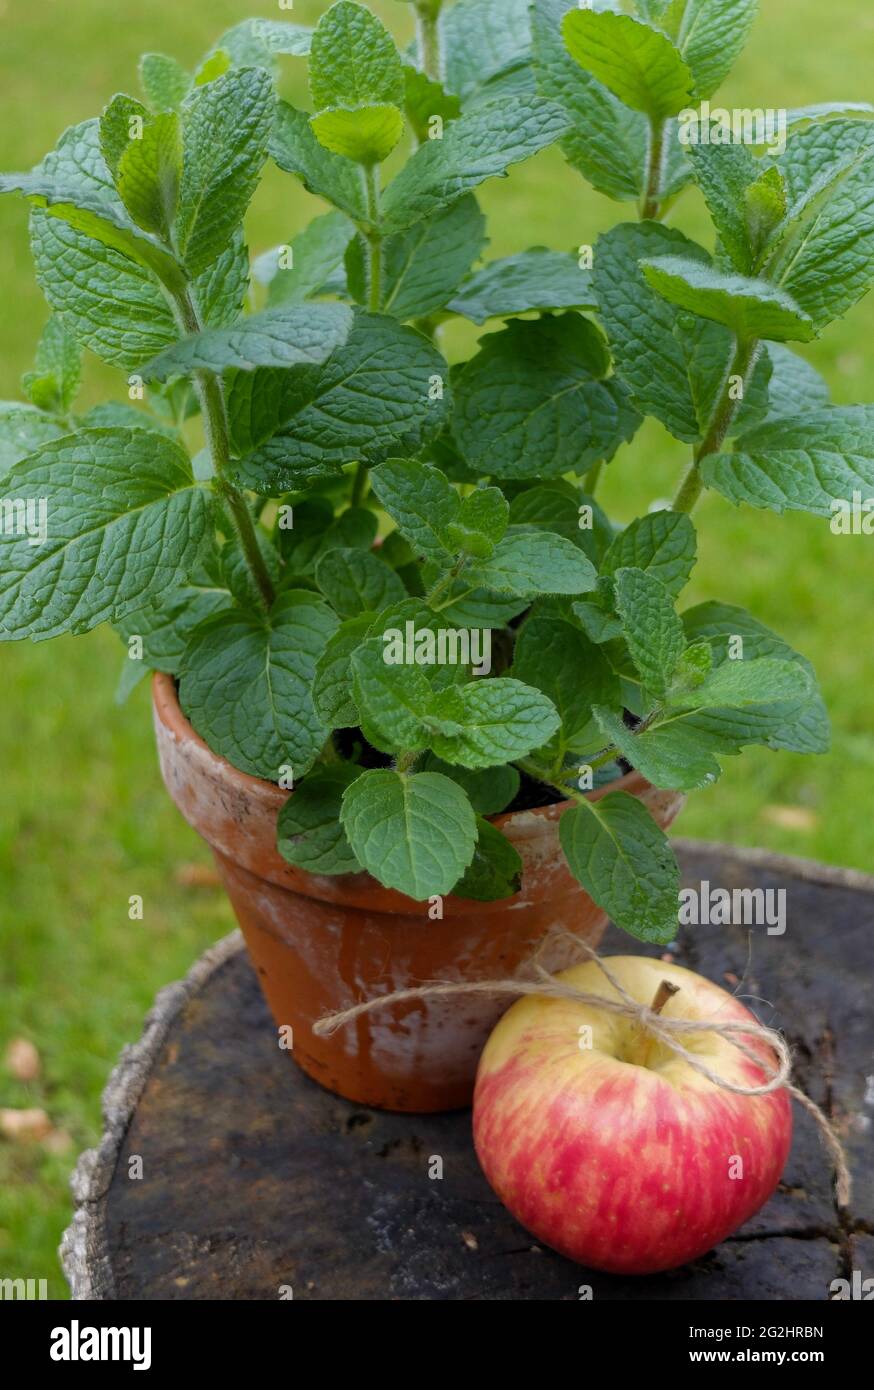 Apple mint (Mentha suaveolens) in a pot Stock Photo